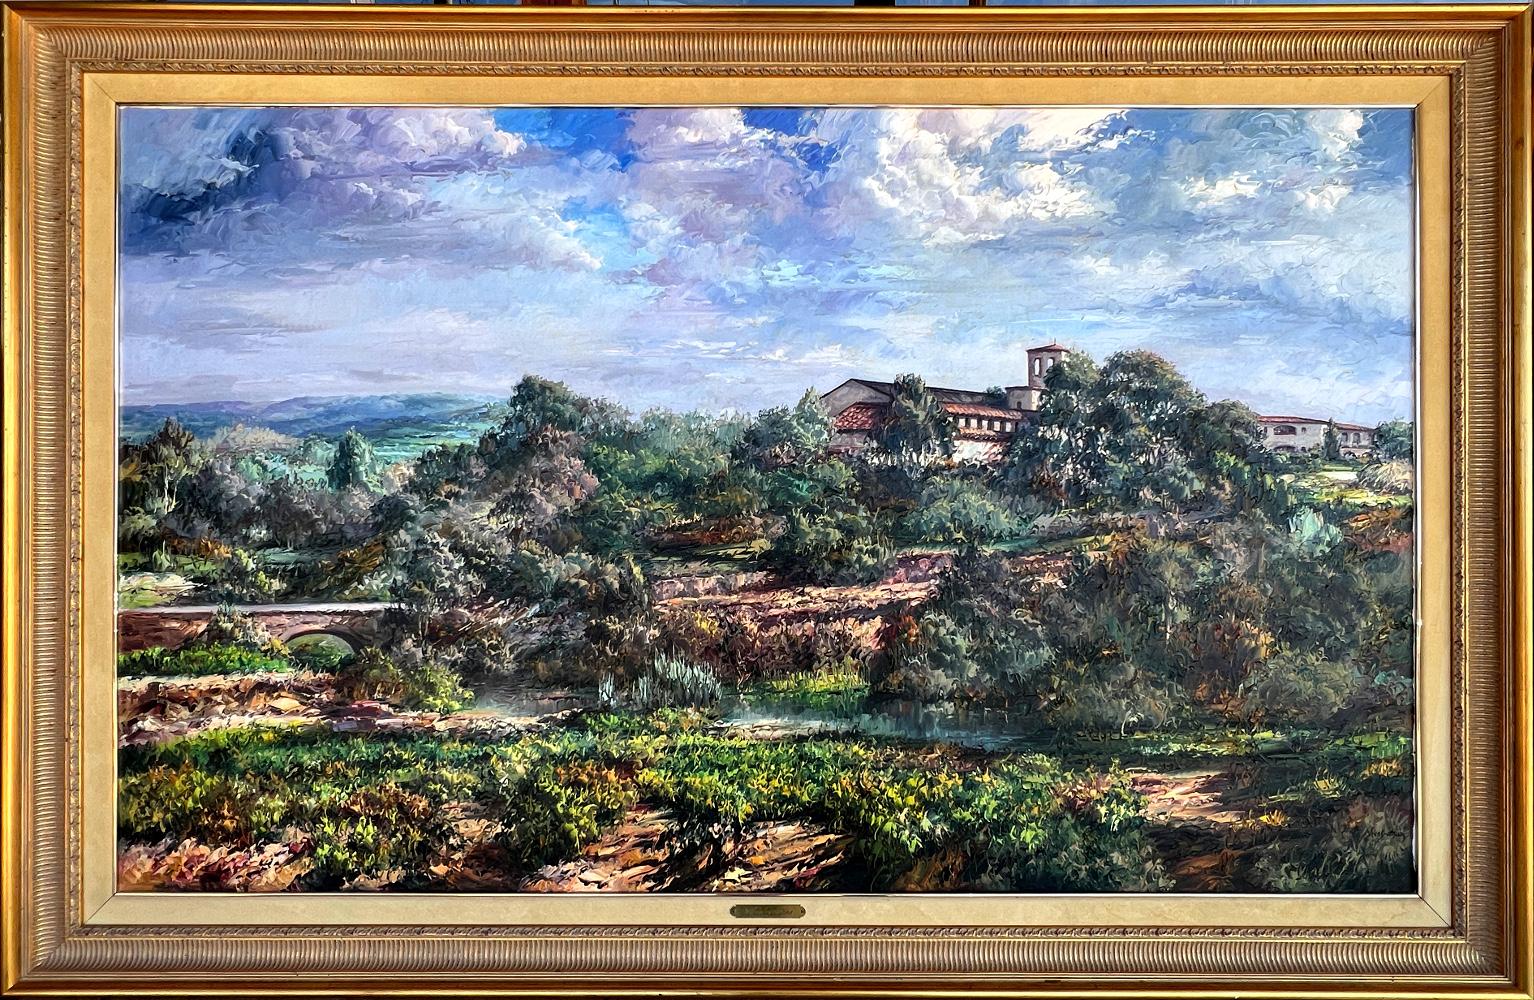 Jose Vives-Atsara Landscape Painting - "La Sala De Vallformosa" Penedes. 45X69 FRAME SIZE. SPANISH VILLA WINERY SPAIN 